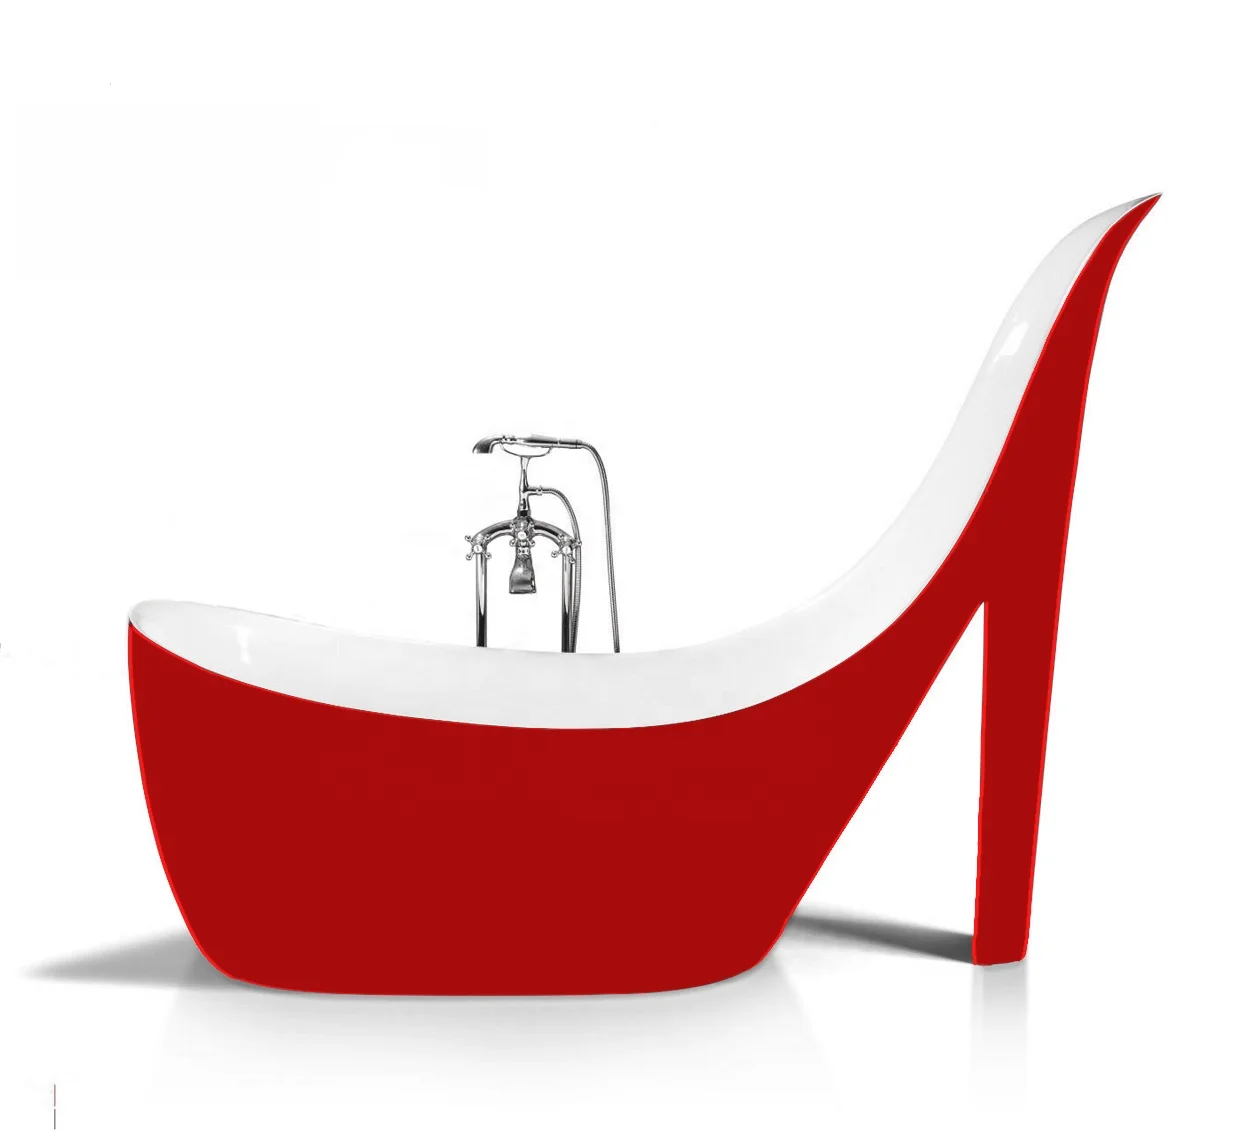 
Hot sale modern design cheap acrylic freestanding soaking bath tub red high heeled shoes free standing bathtub for bathroom 